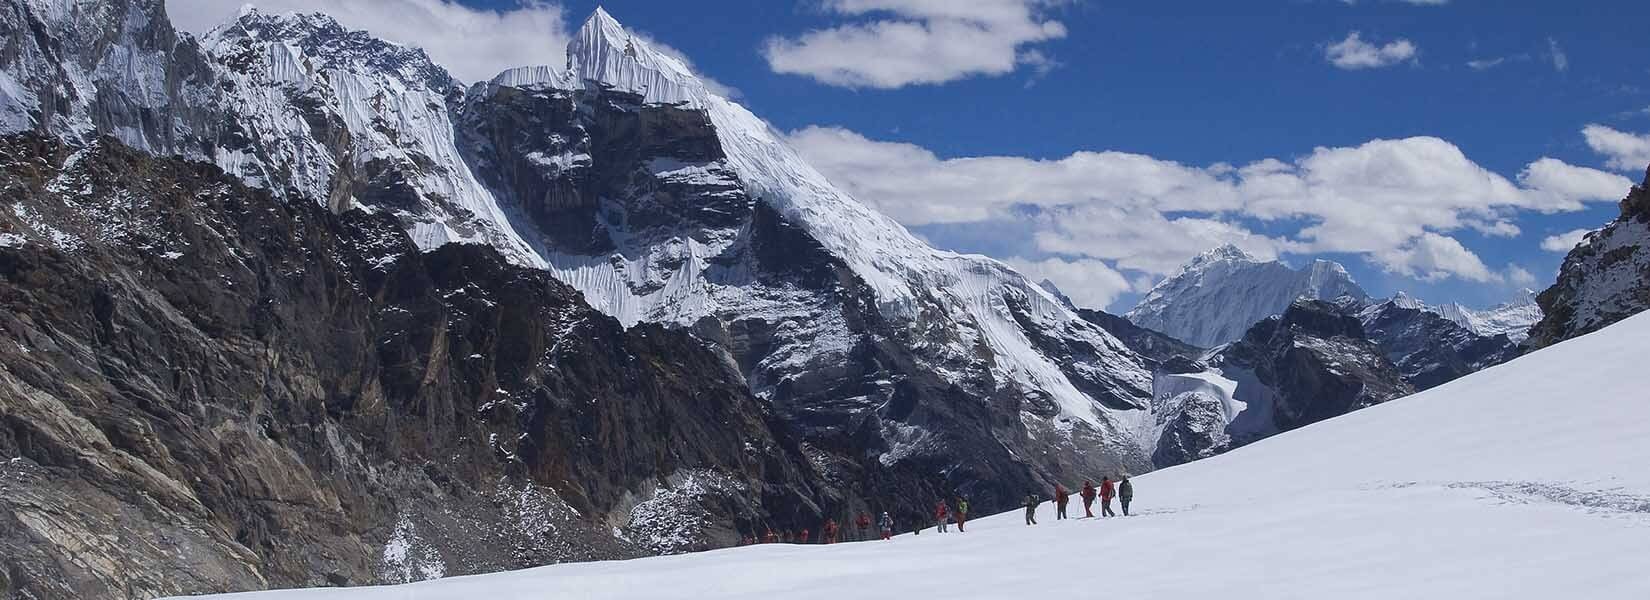 high pass trekking nepal